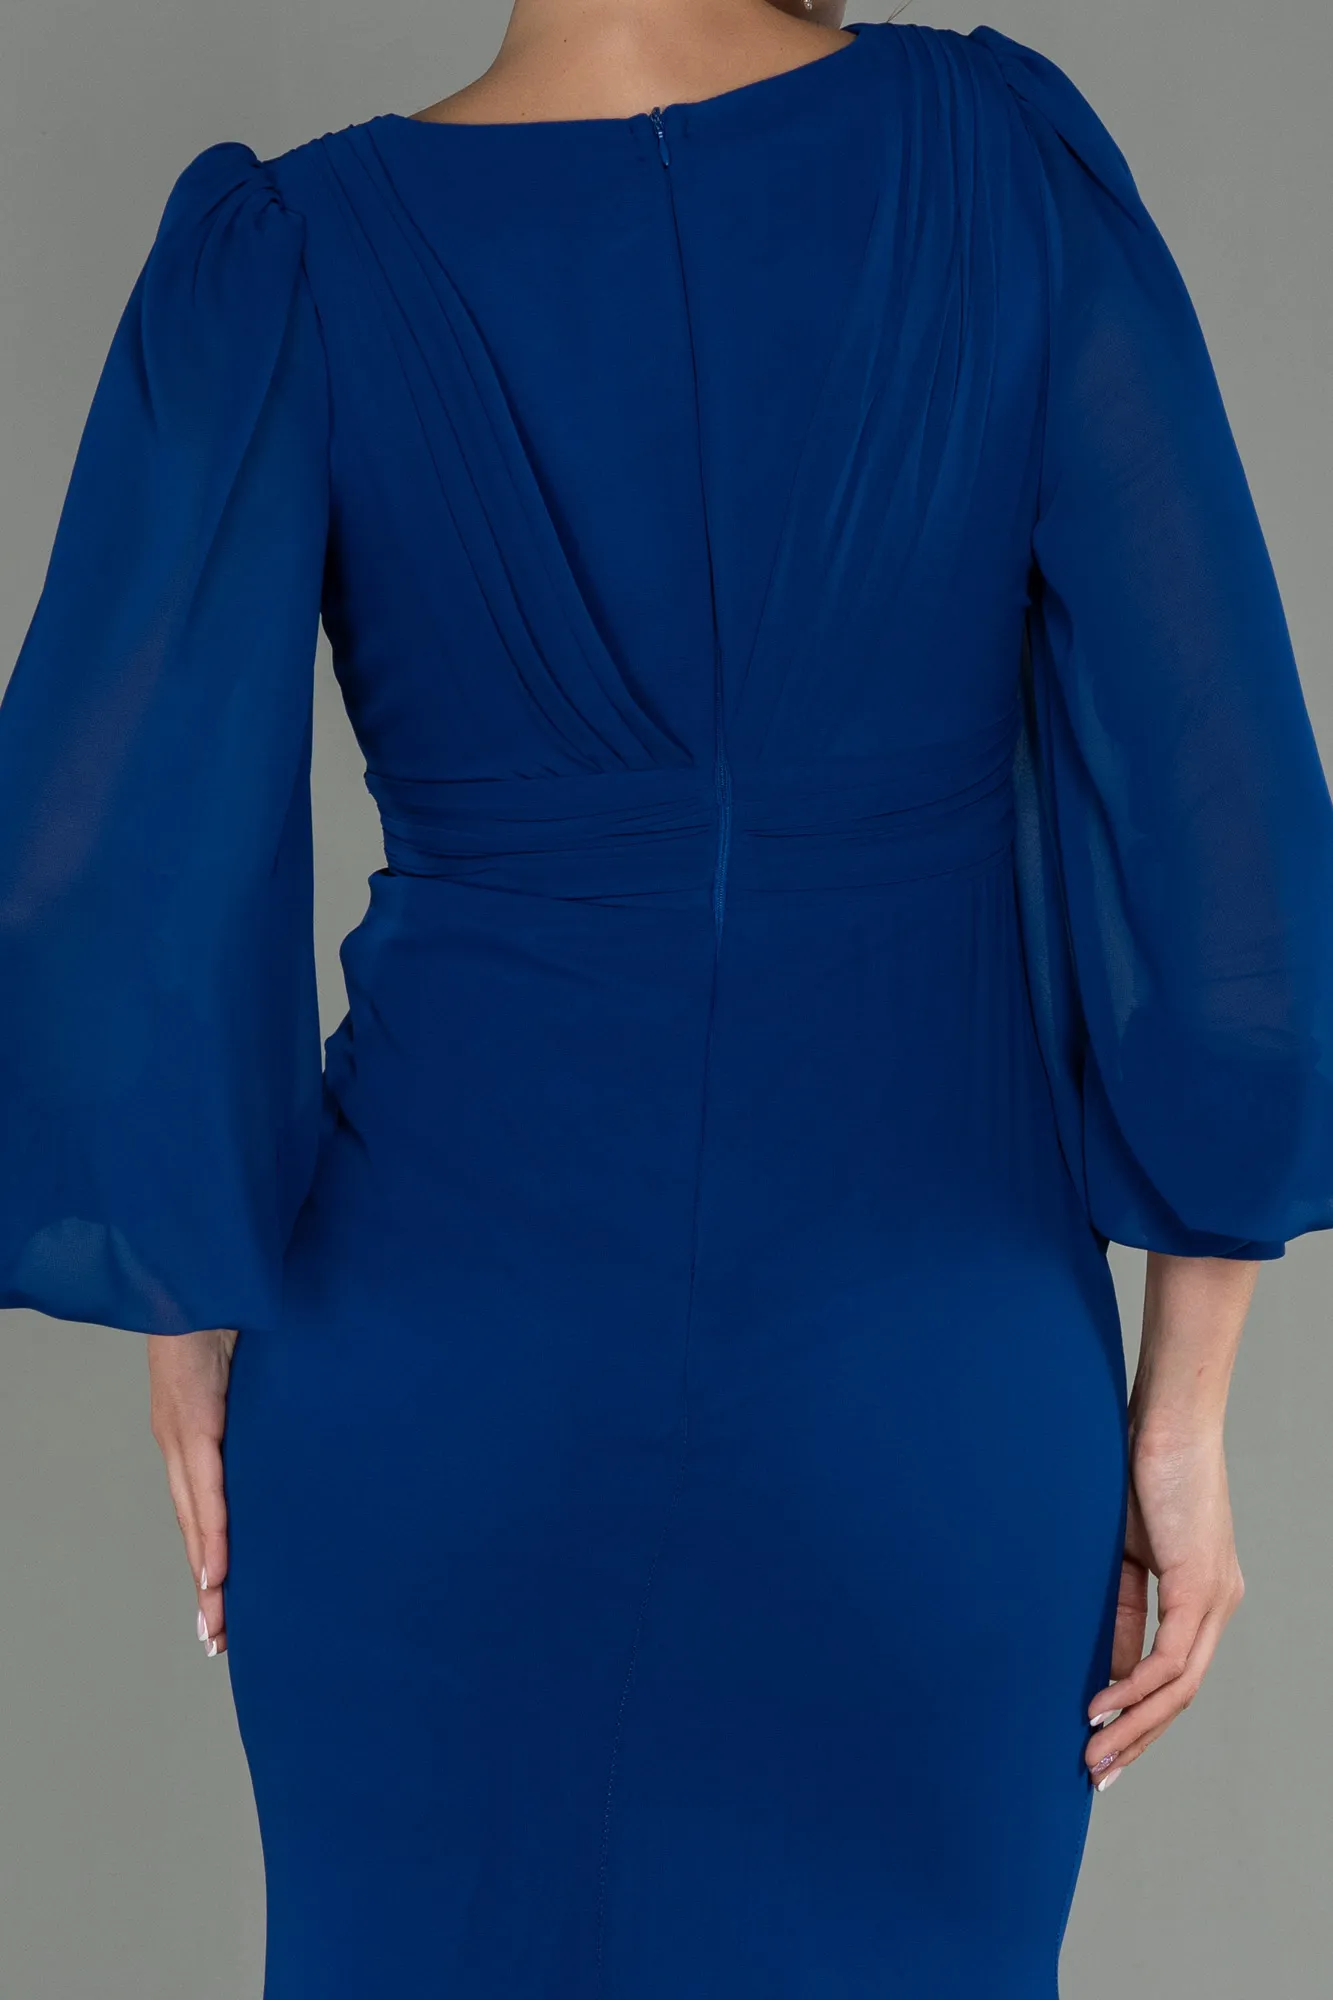 Sax Blue-Long Chiffon Evening Dress ABU2818